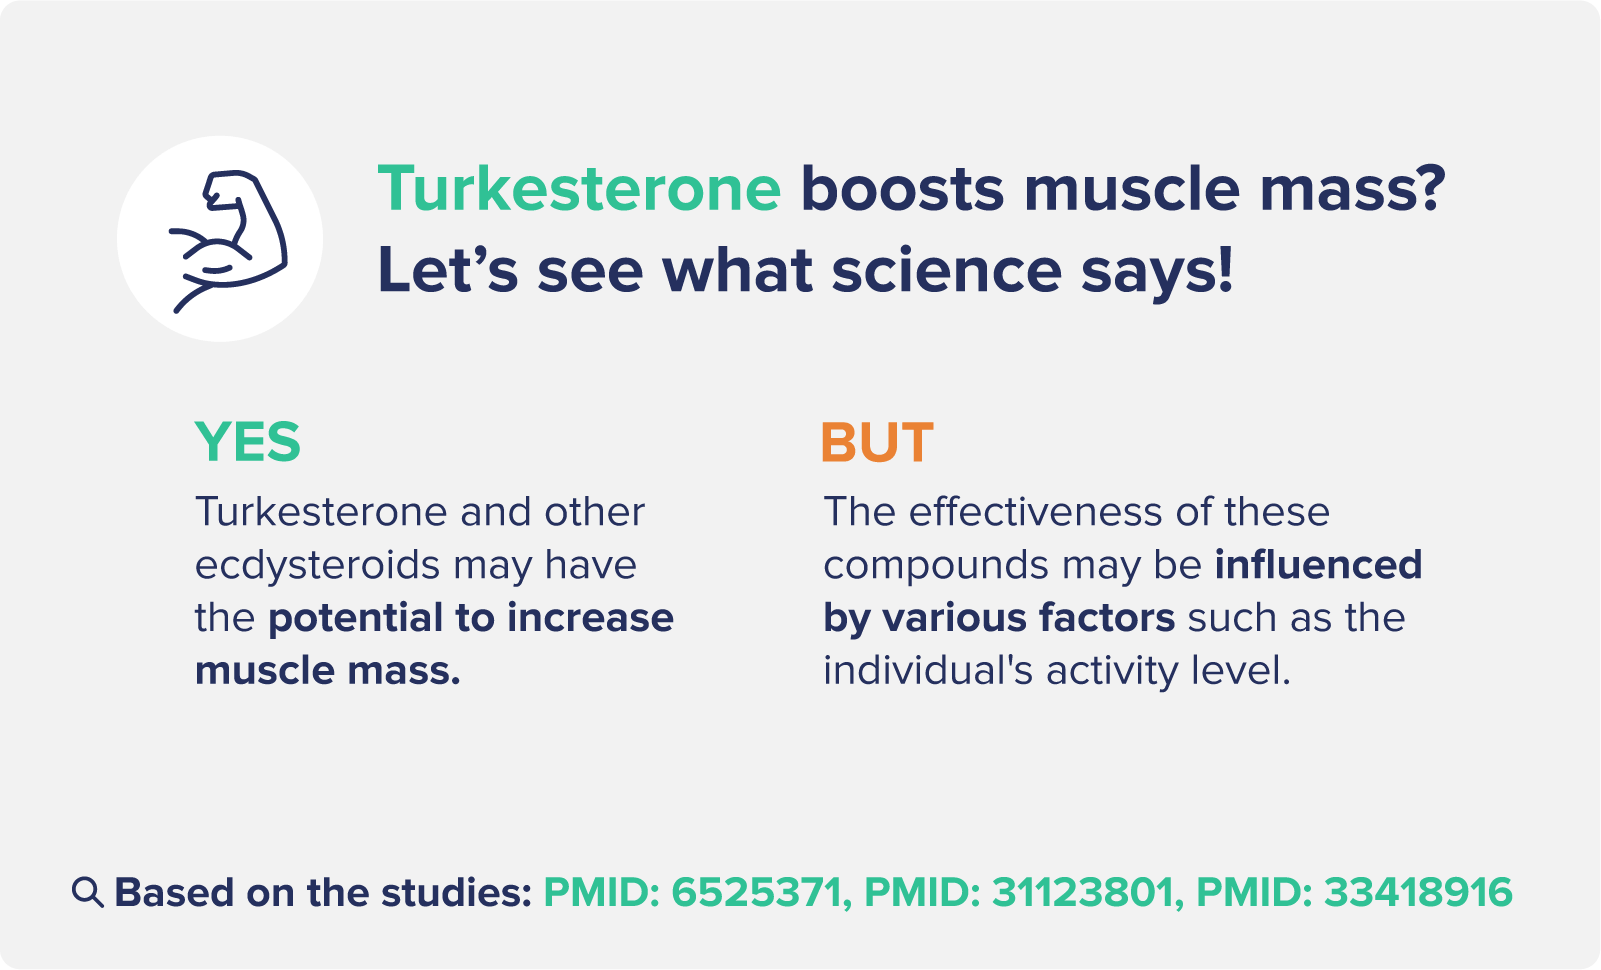 Turkesterone boosts muscle mass